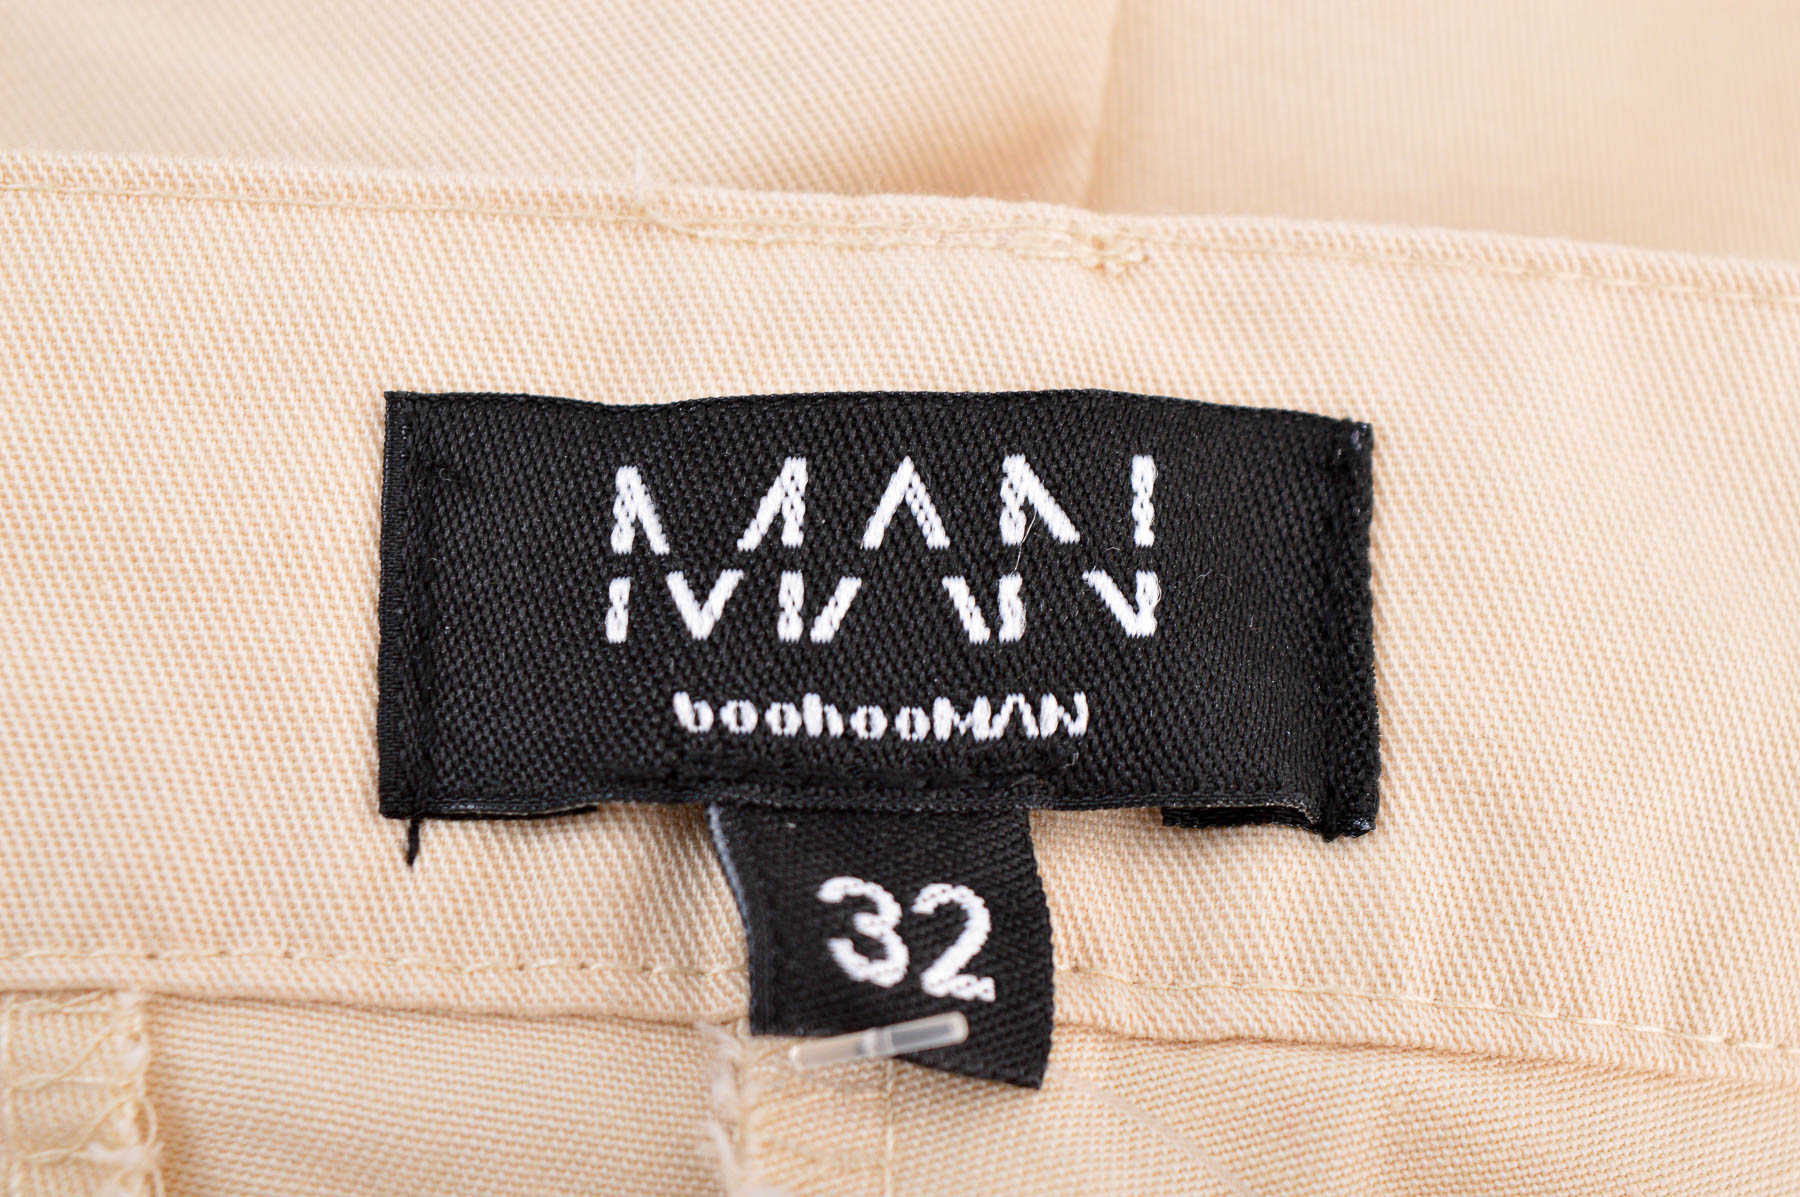 Pantalon pentru bărbați - Boohoo MAN - 2